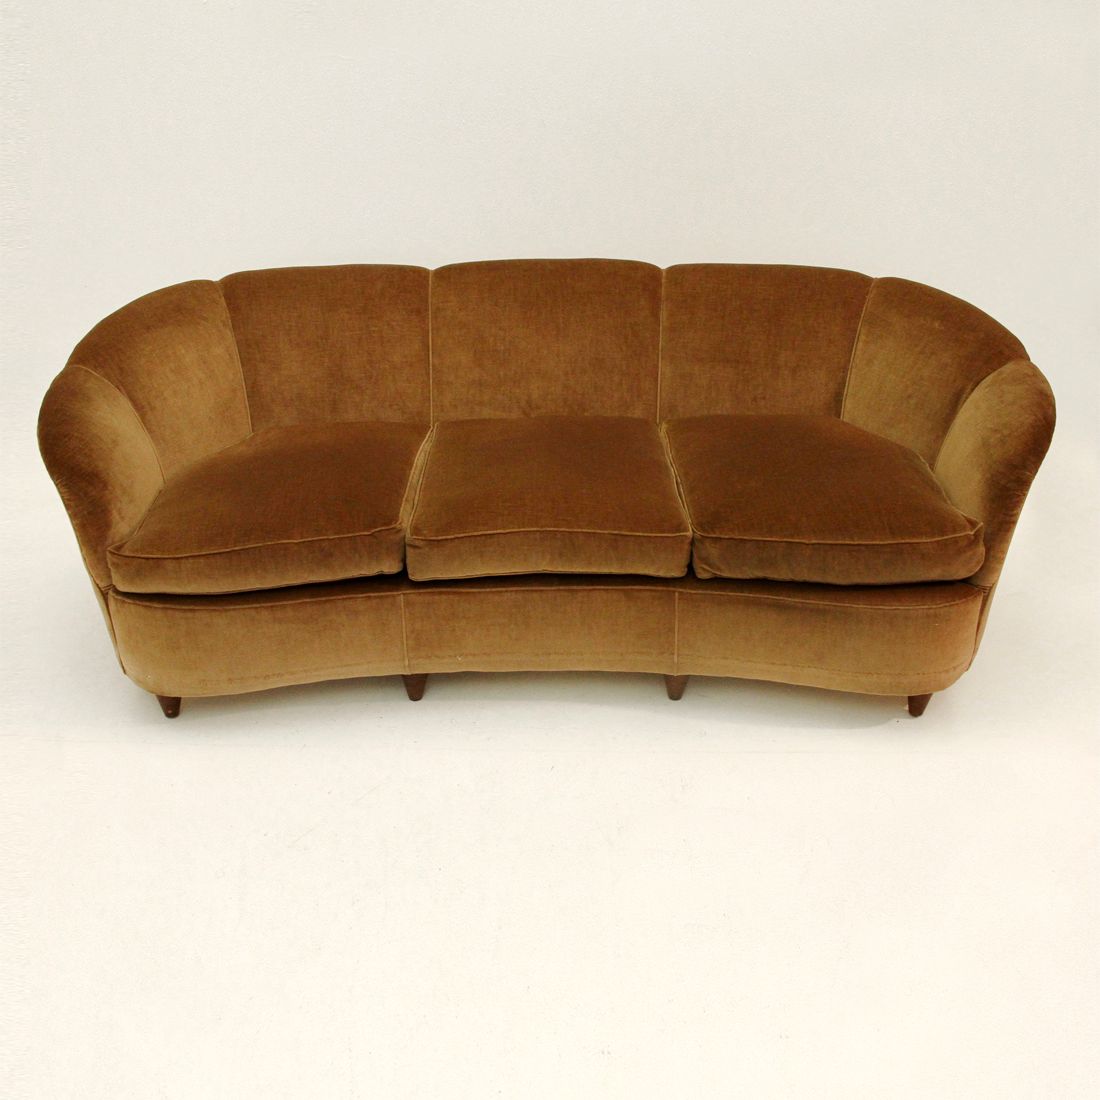 Mid-Century Italian Velvet Sofa, 1950s for sale at Pamono